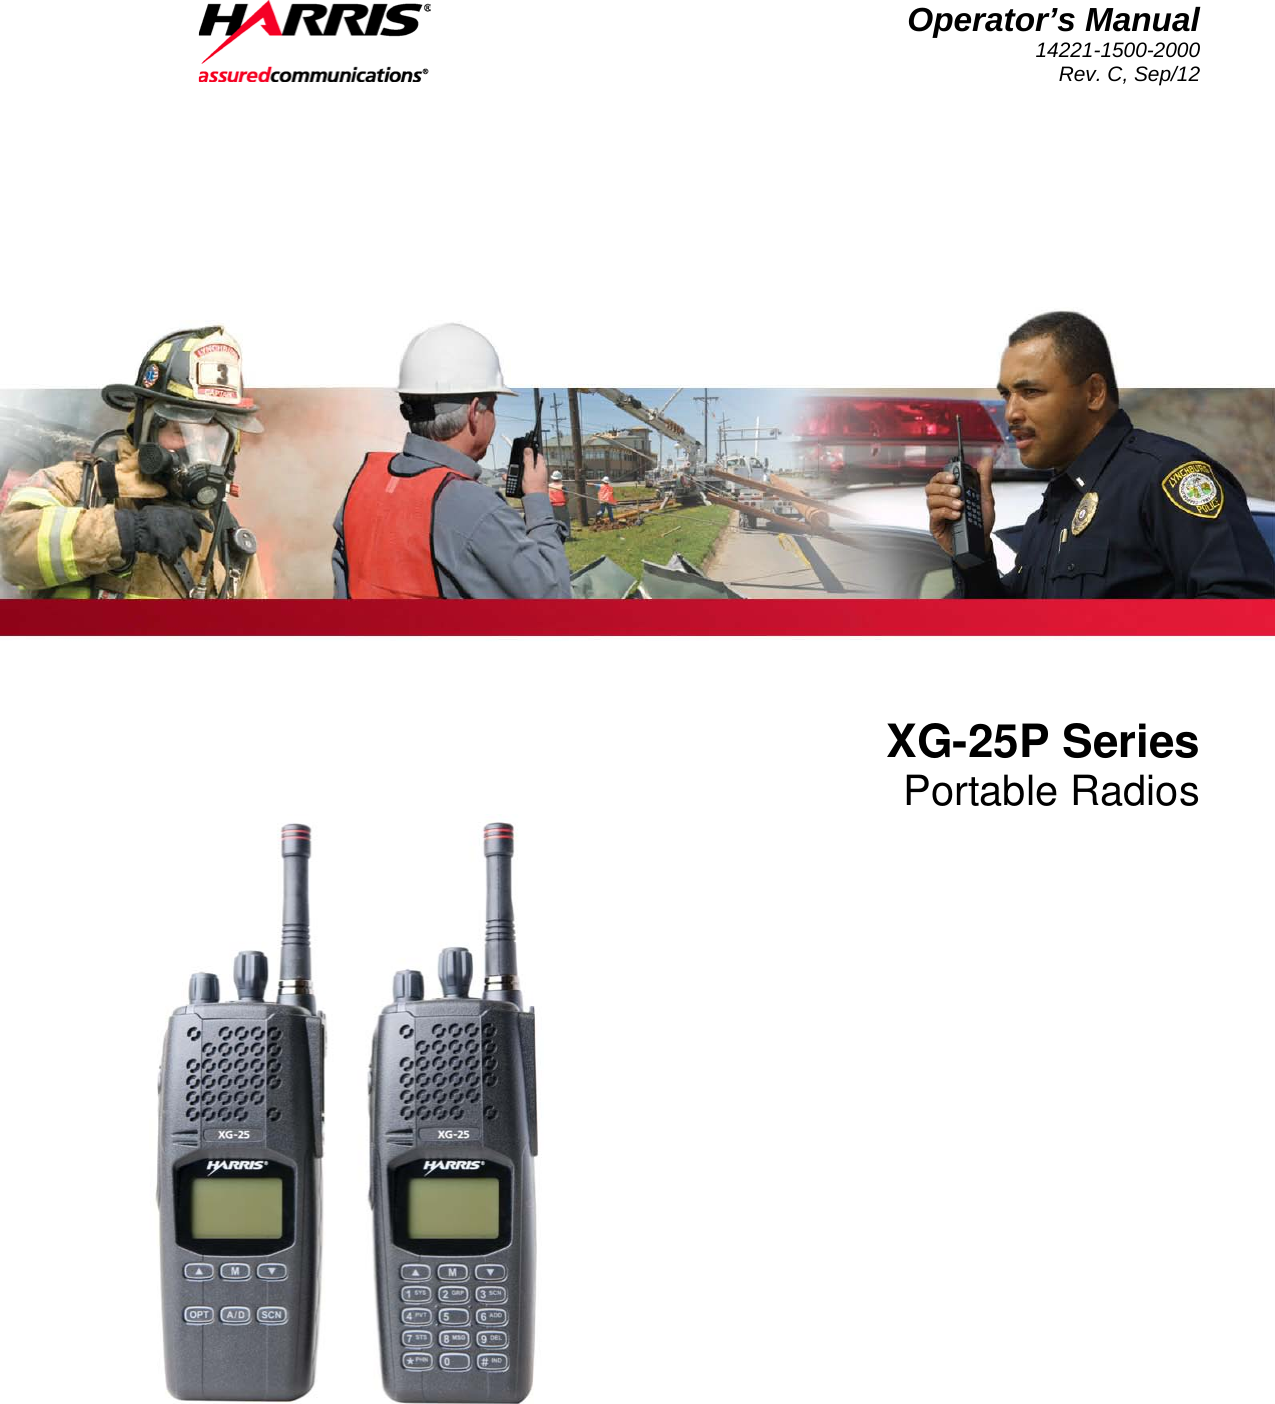  Operator’s Manual 14221-1500-2000 Rev. C, Sep/12    XG-25P Series Portable Radios  